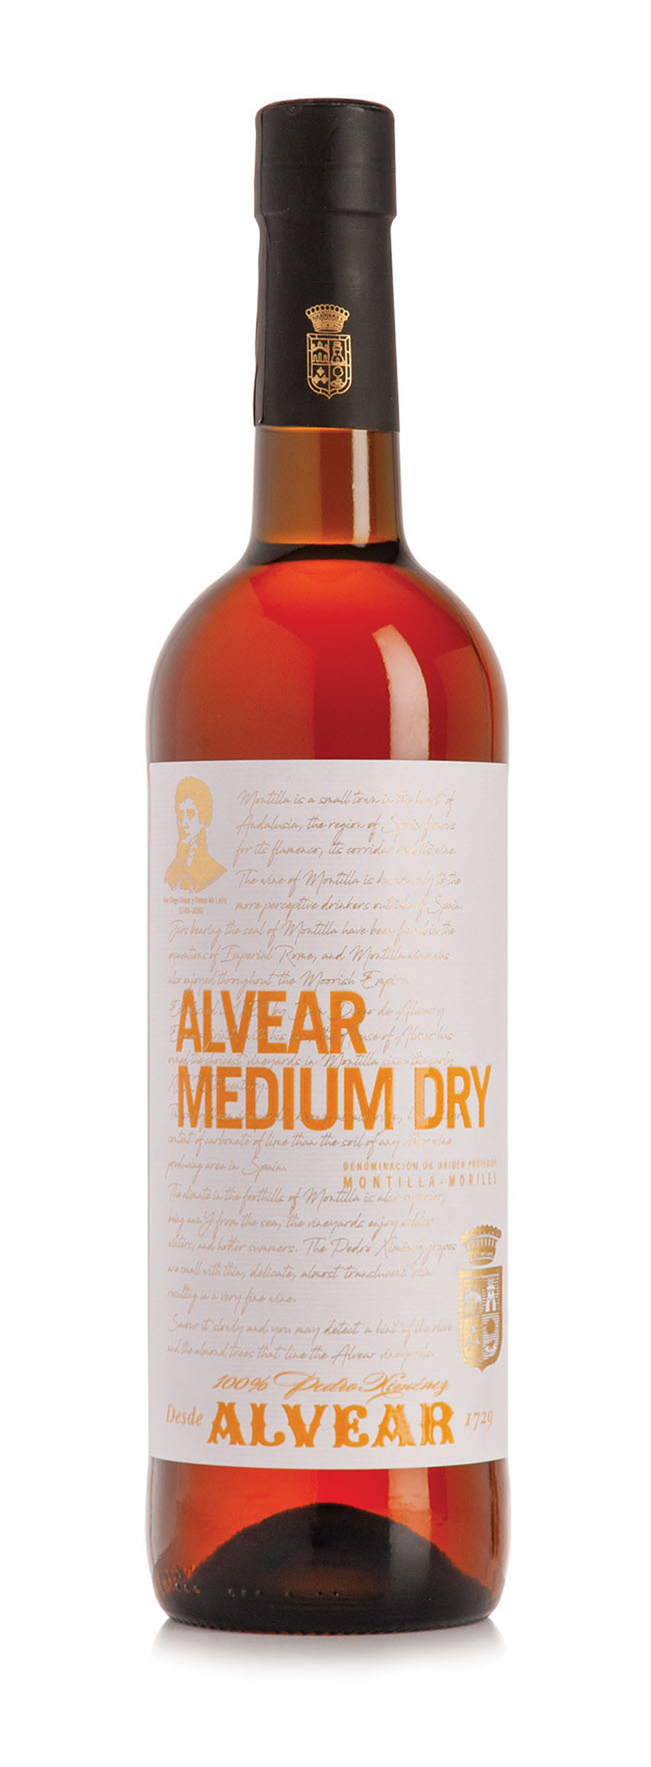 Alvear Medium Dry Bottle Photo